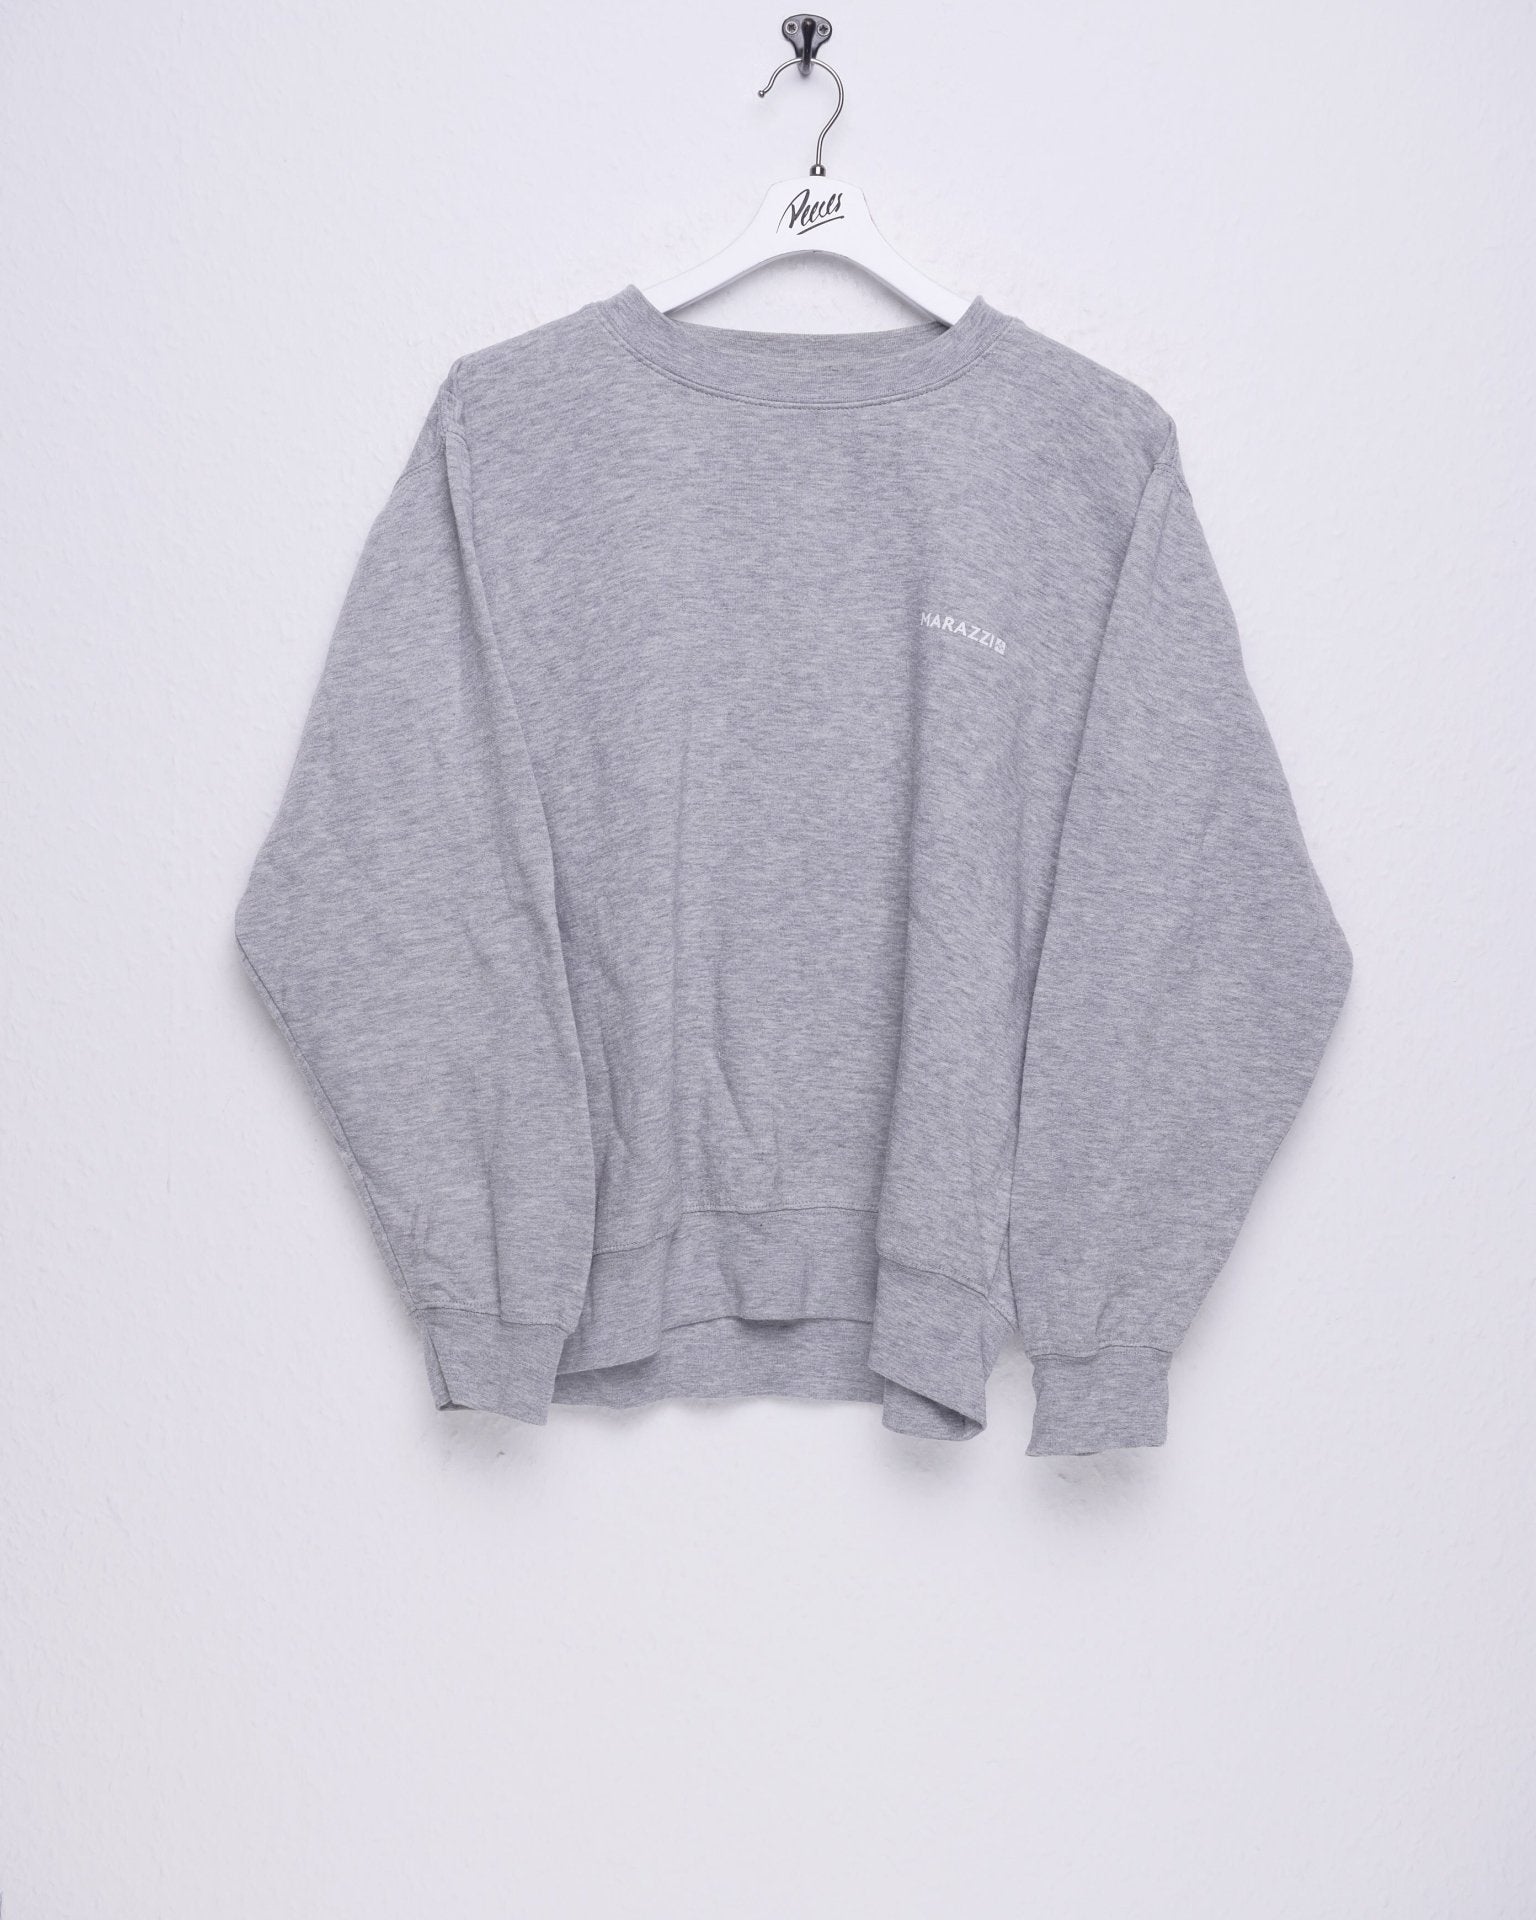 'Marazzi' printed Spellout Vintage basic Sweater - Peeces